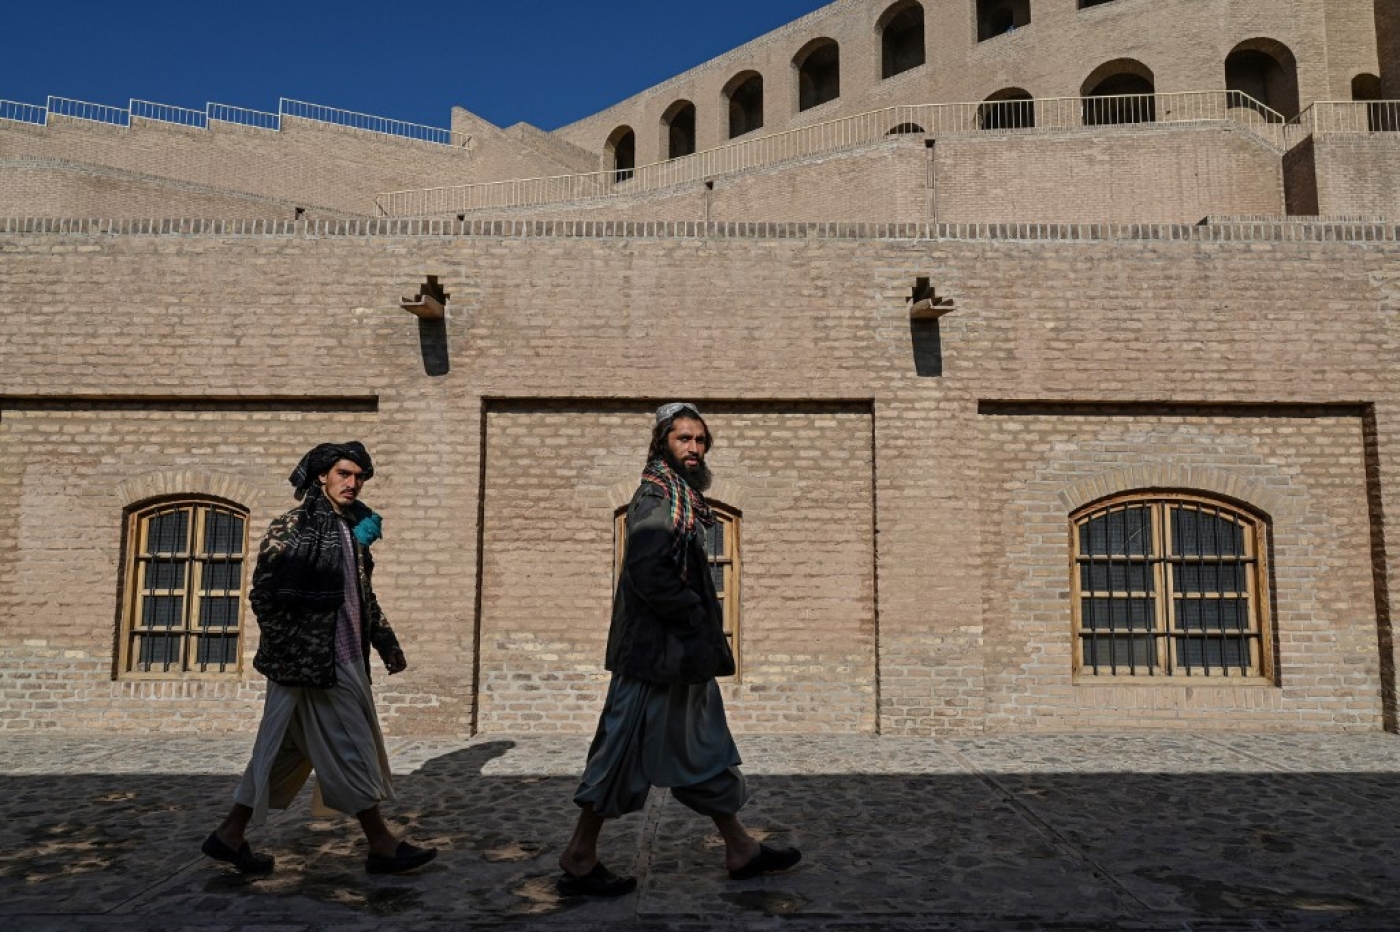 The Herat citadel